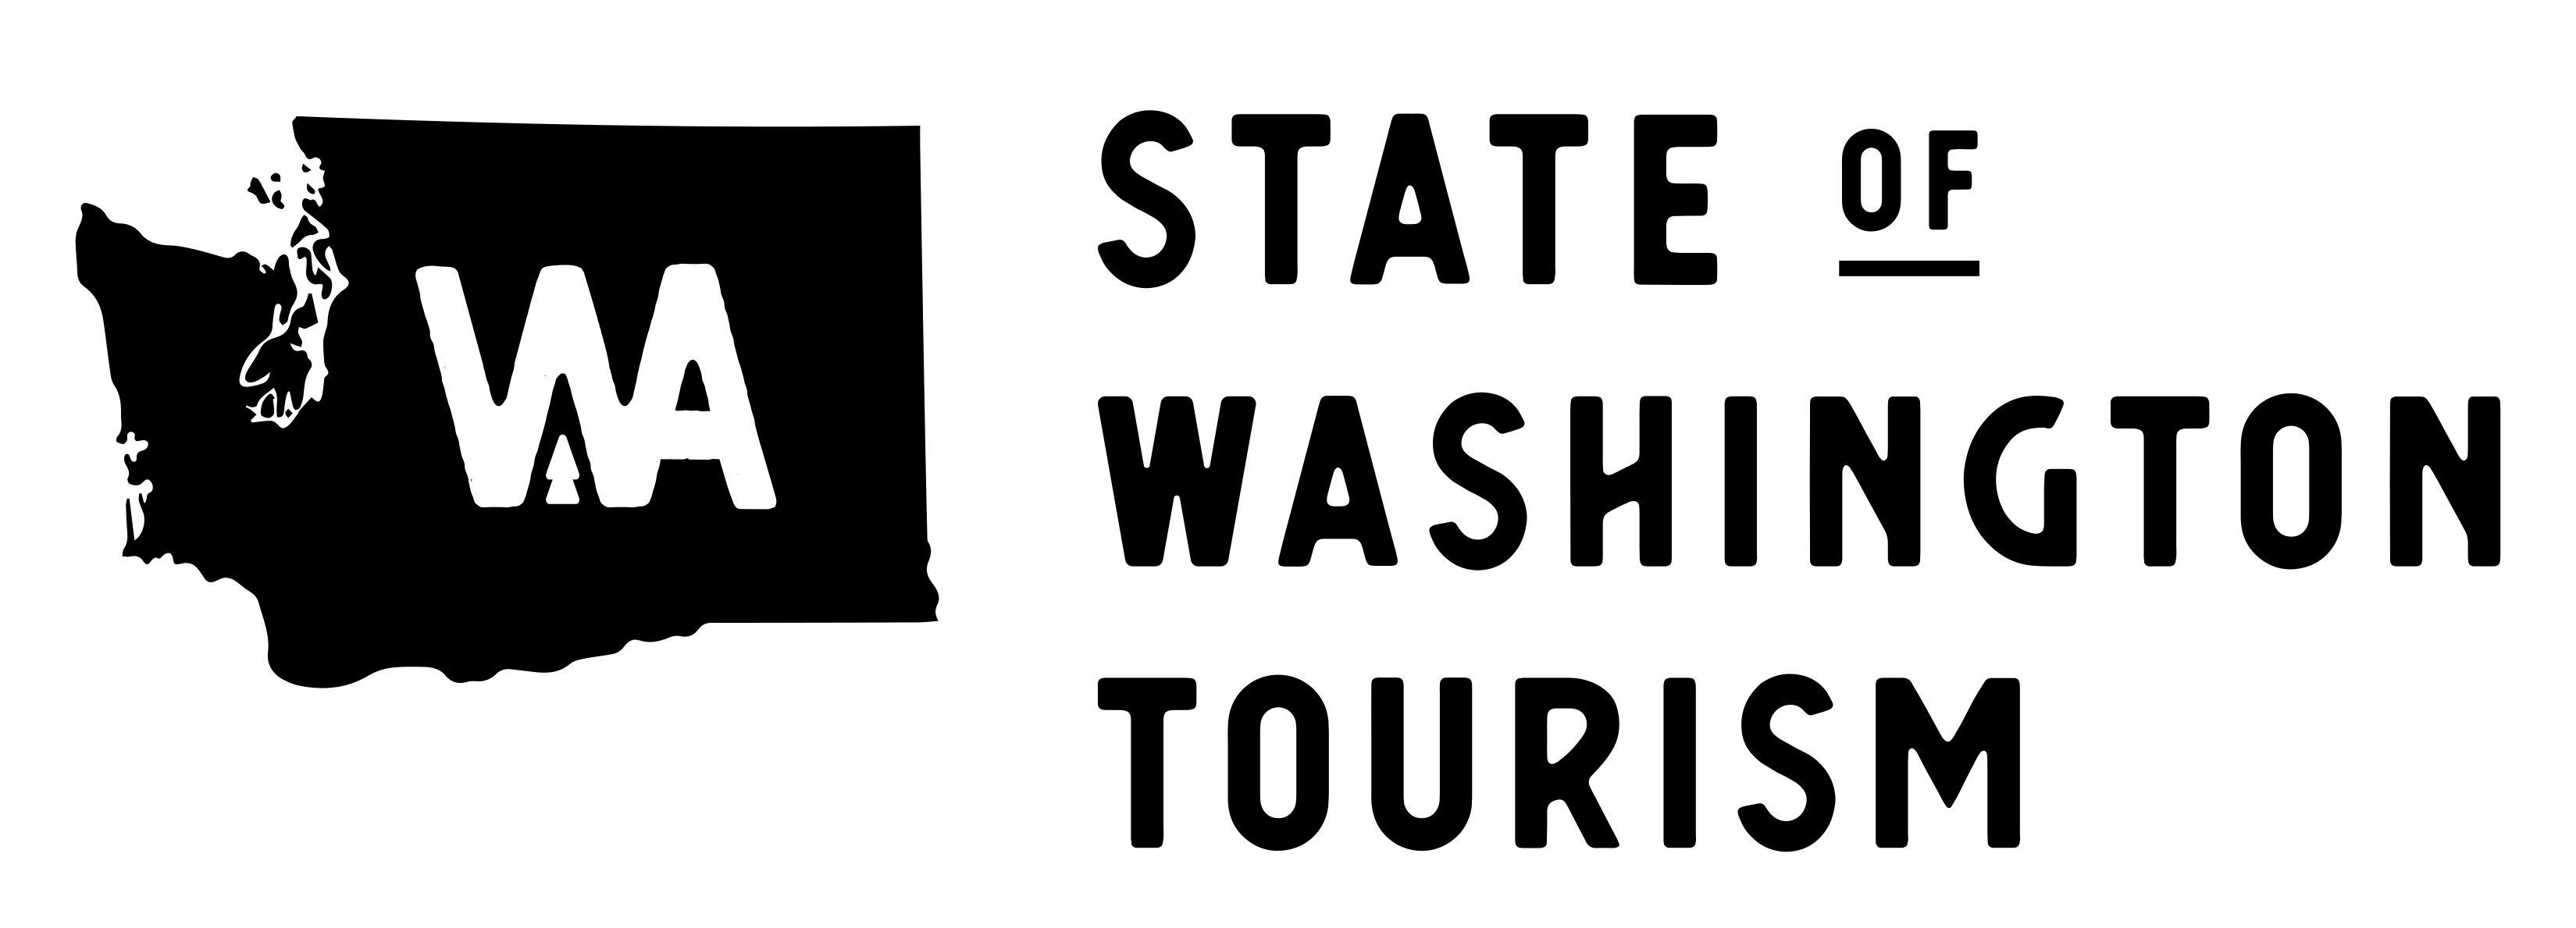 wa state tourist attractions